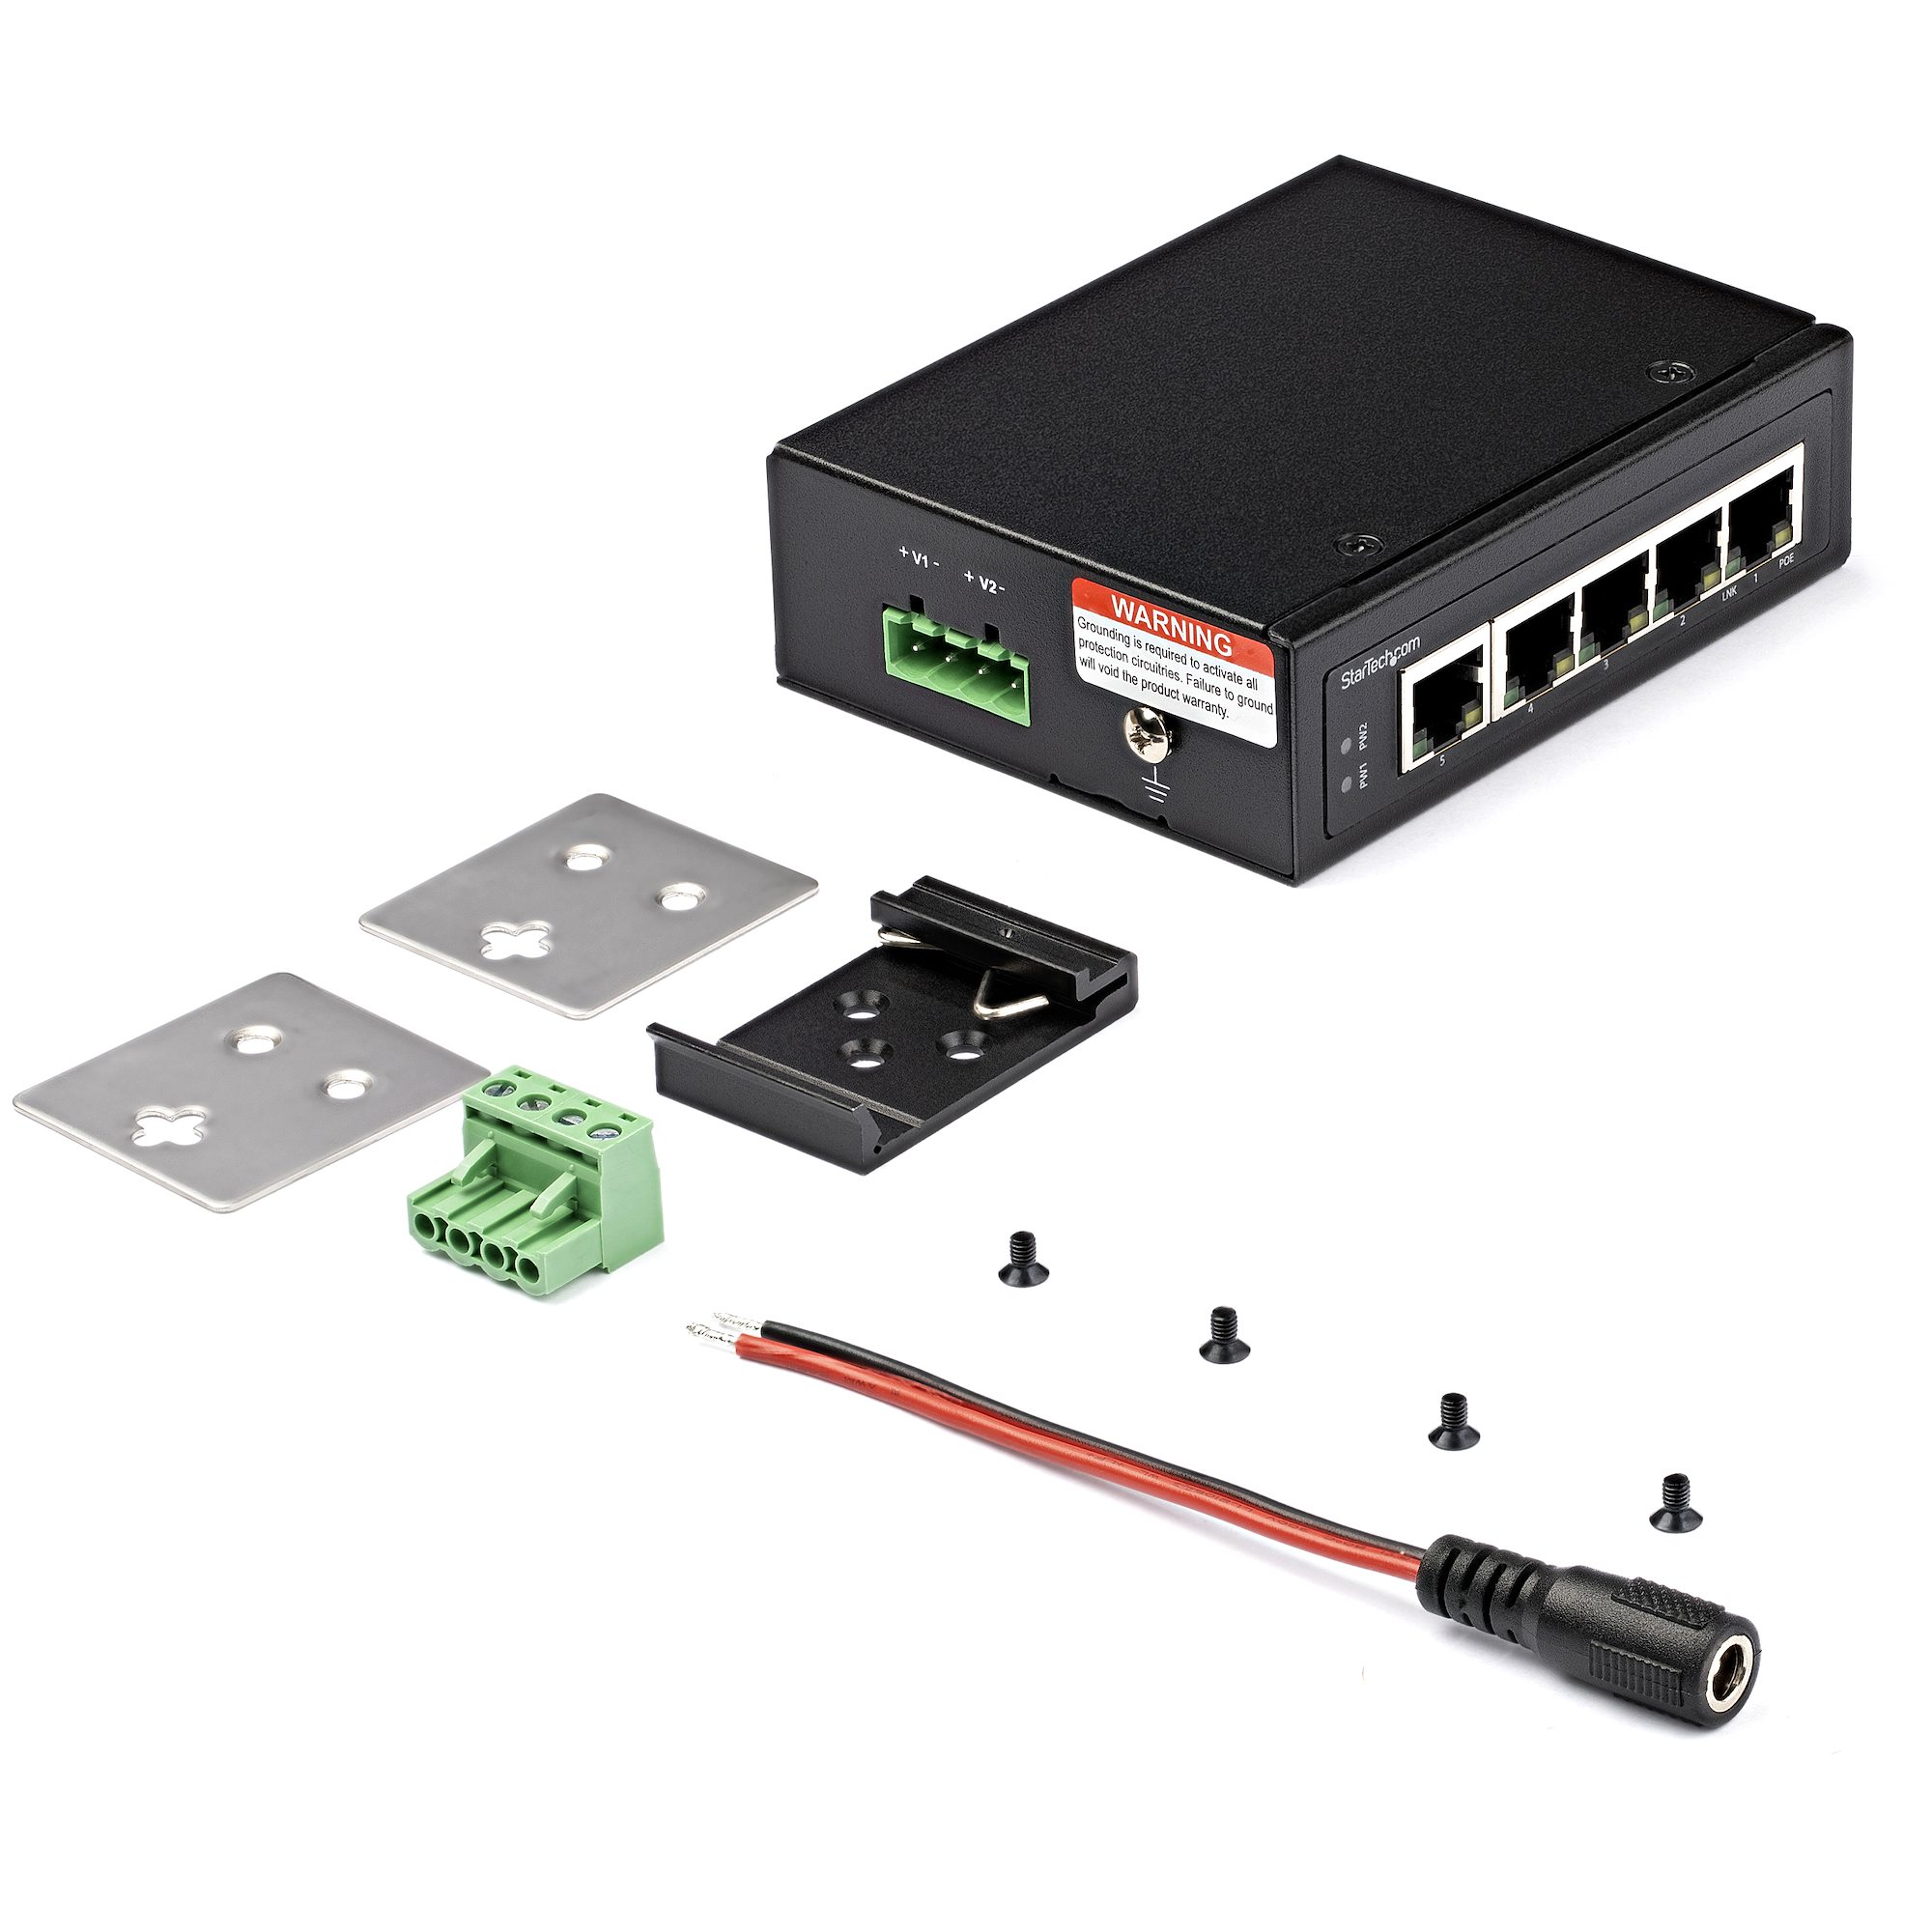 5-Port Gigabit Ethernet PoE+ Switch